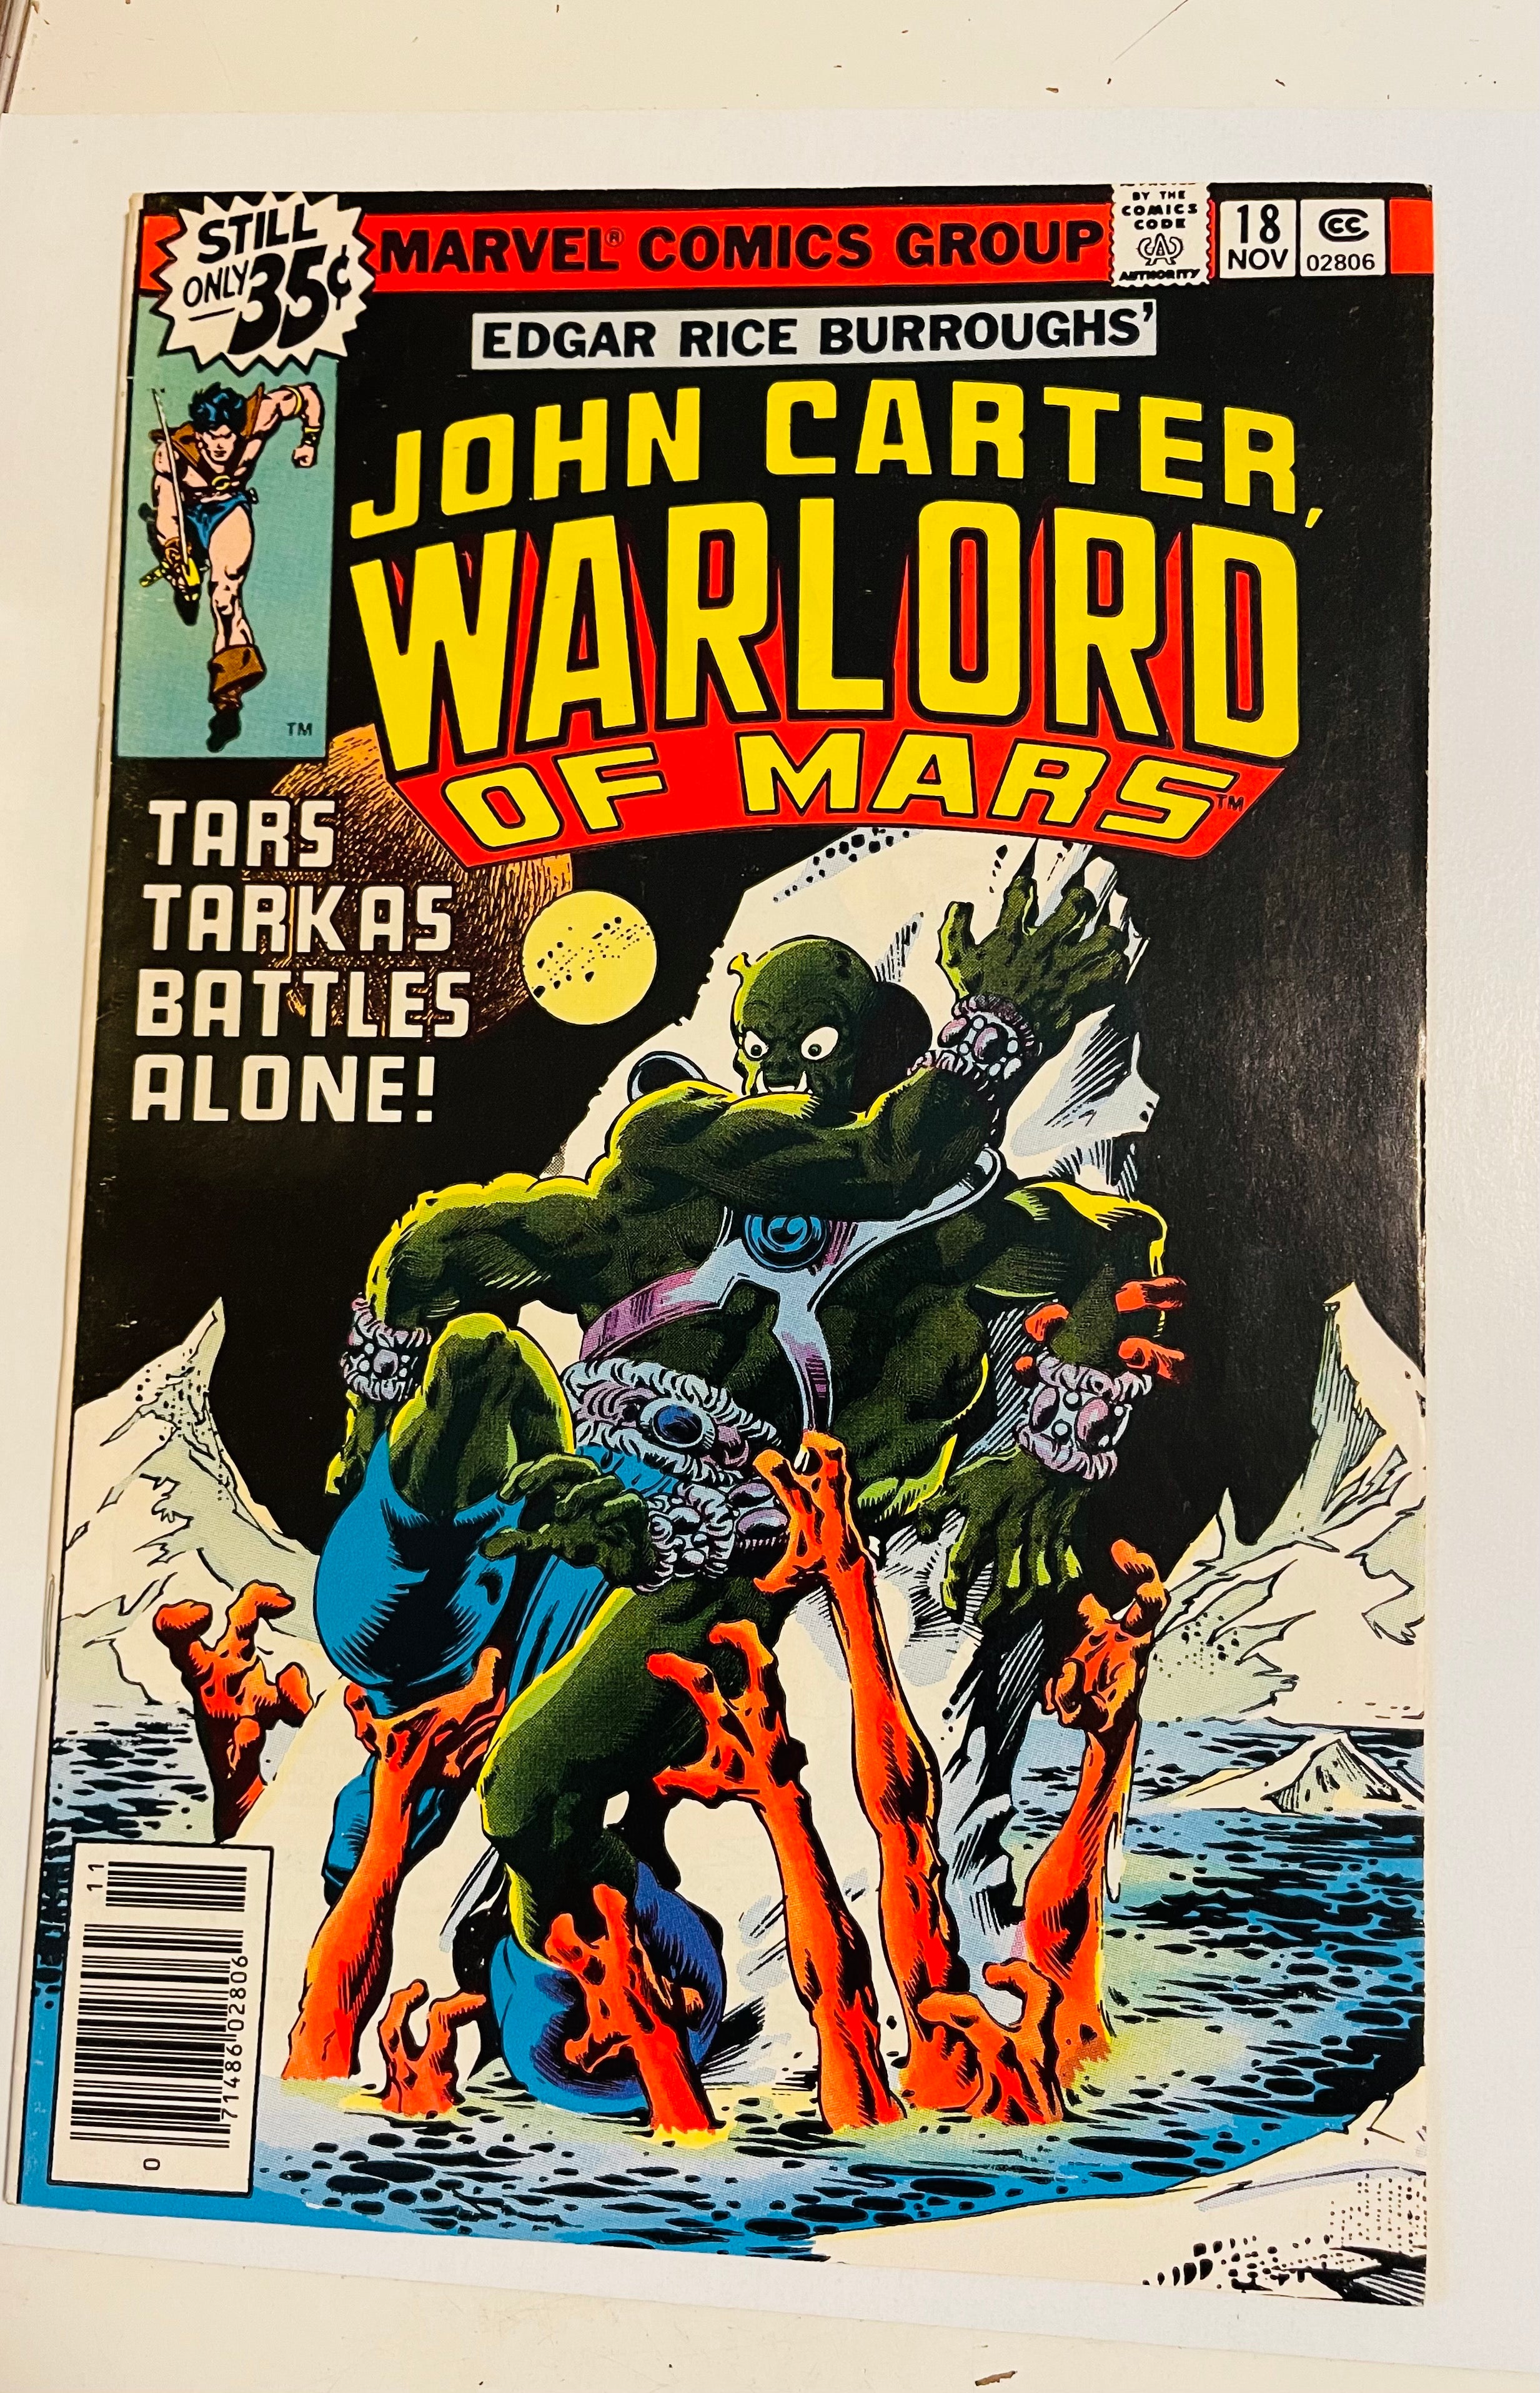 John Carter Warlord of Mars #18 comic with Frank Miller art 1978